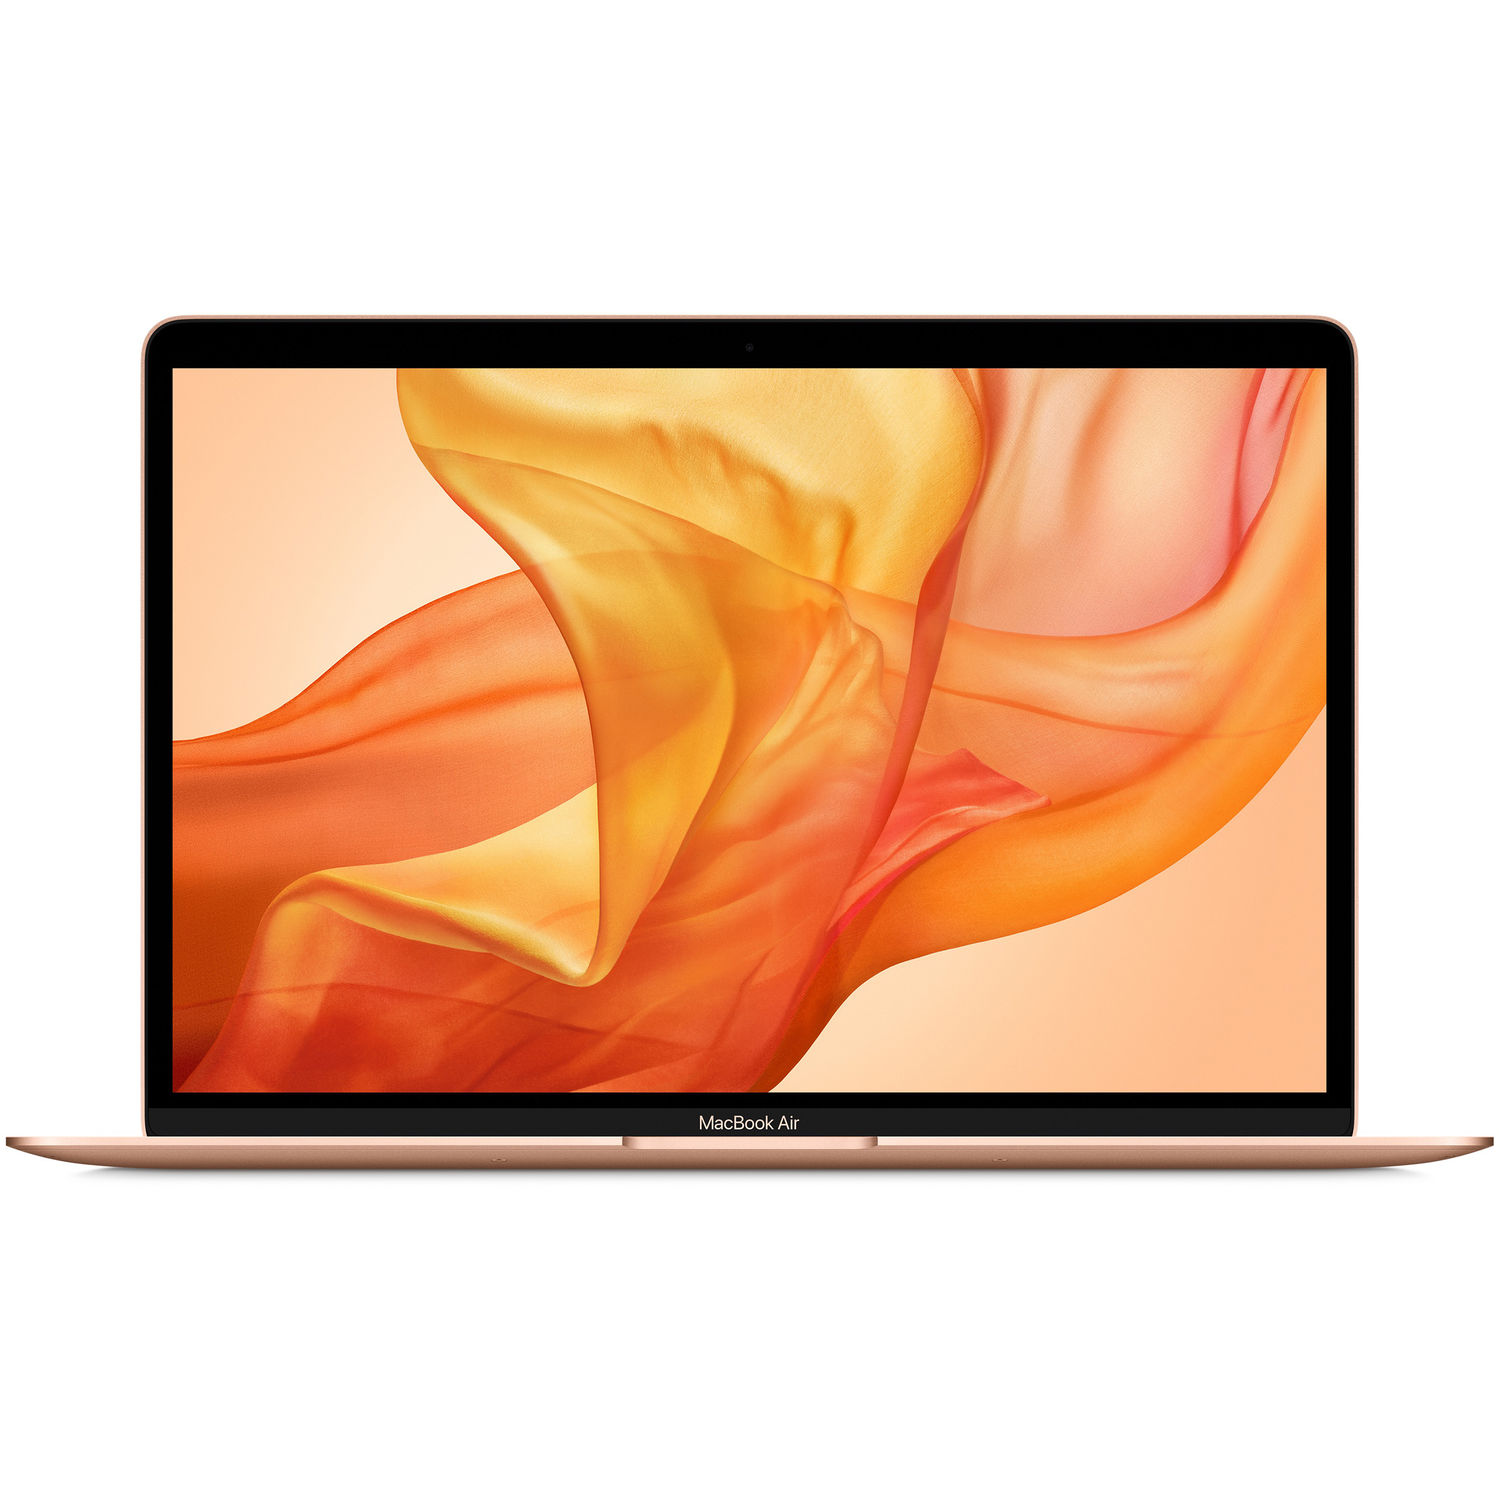 MWTL2 - MacBook Air 2020 13.3 inch (Gold) Core i3/Ram 8GB/SSD 256GB